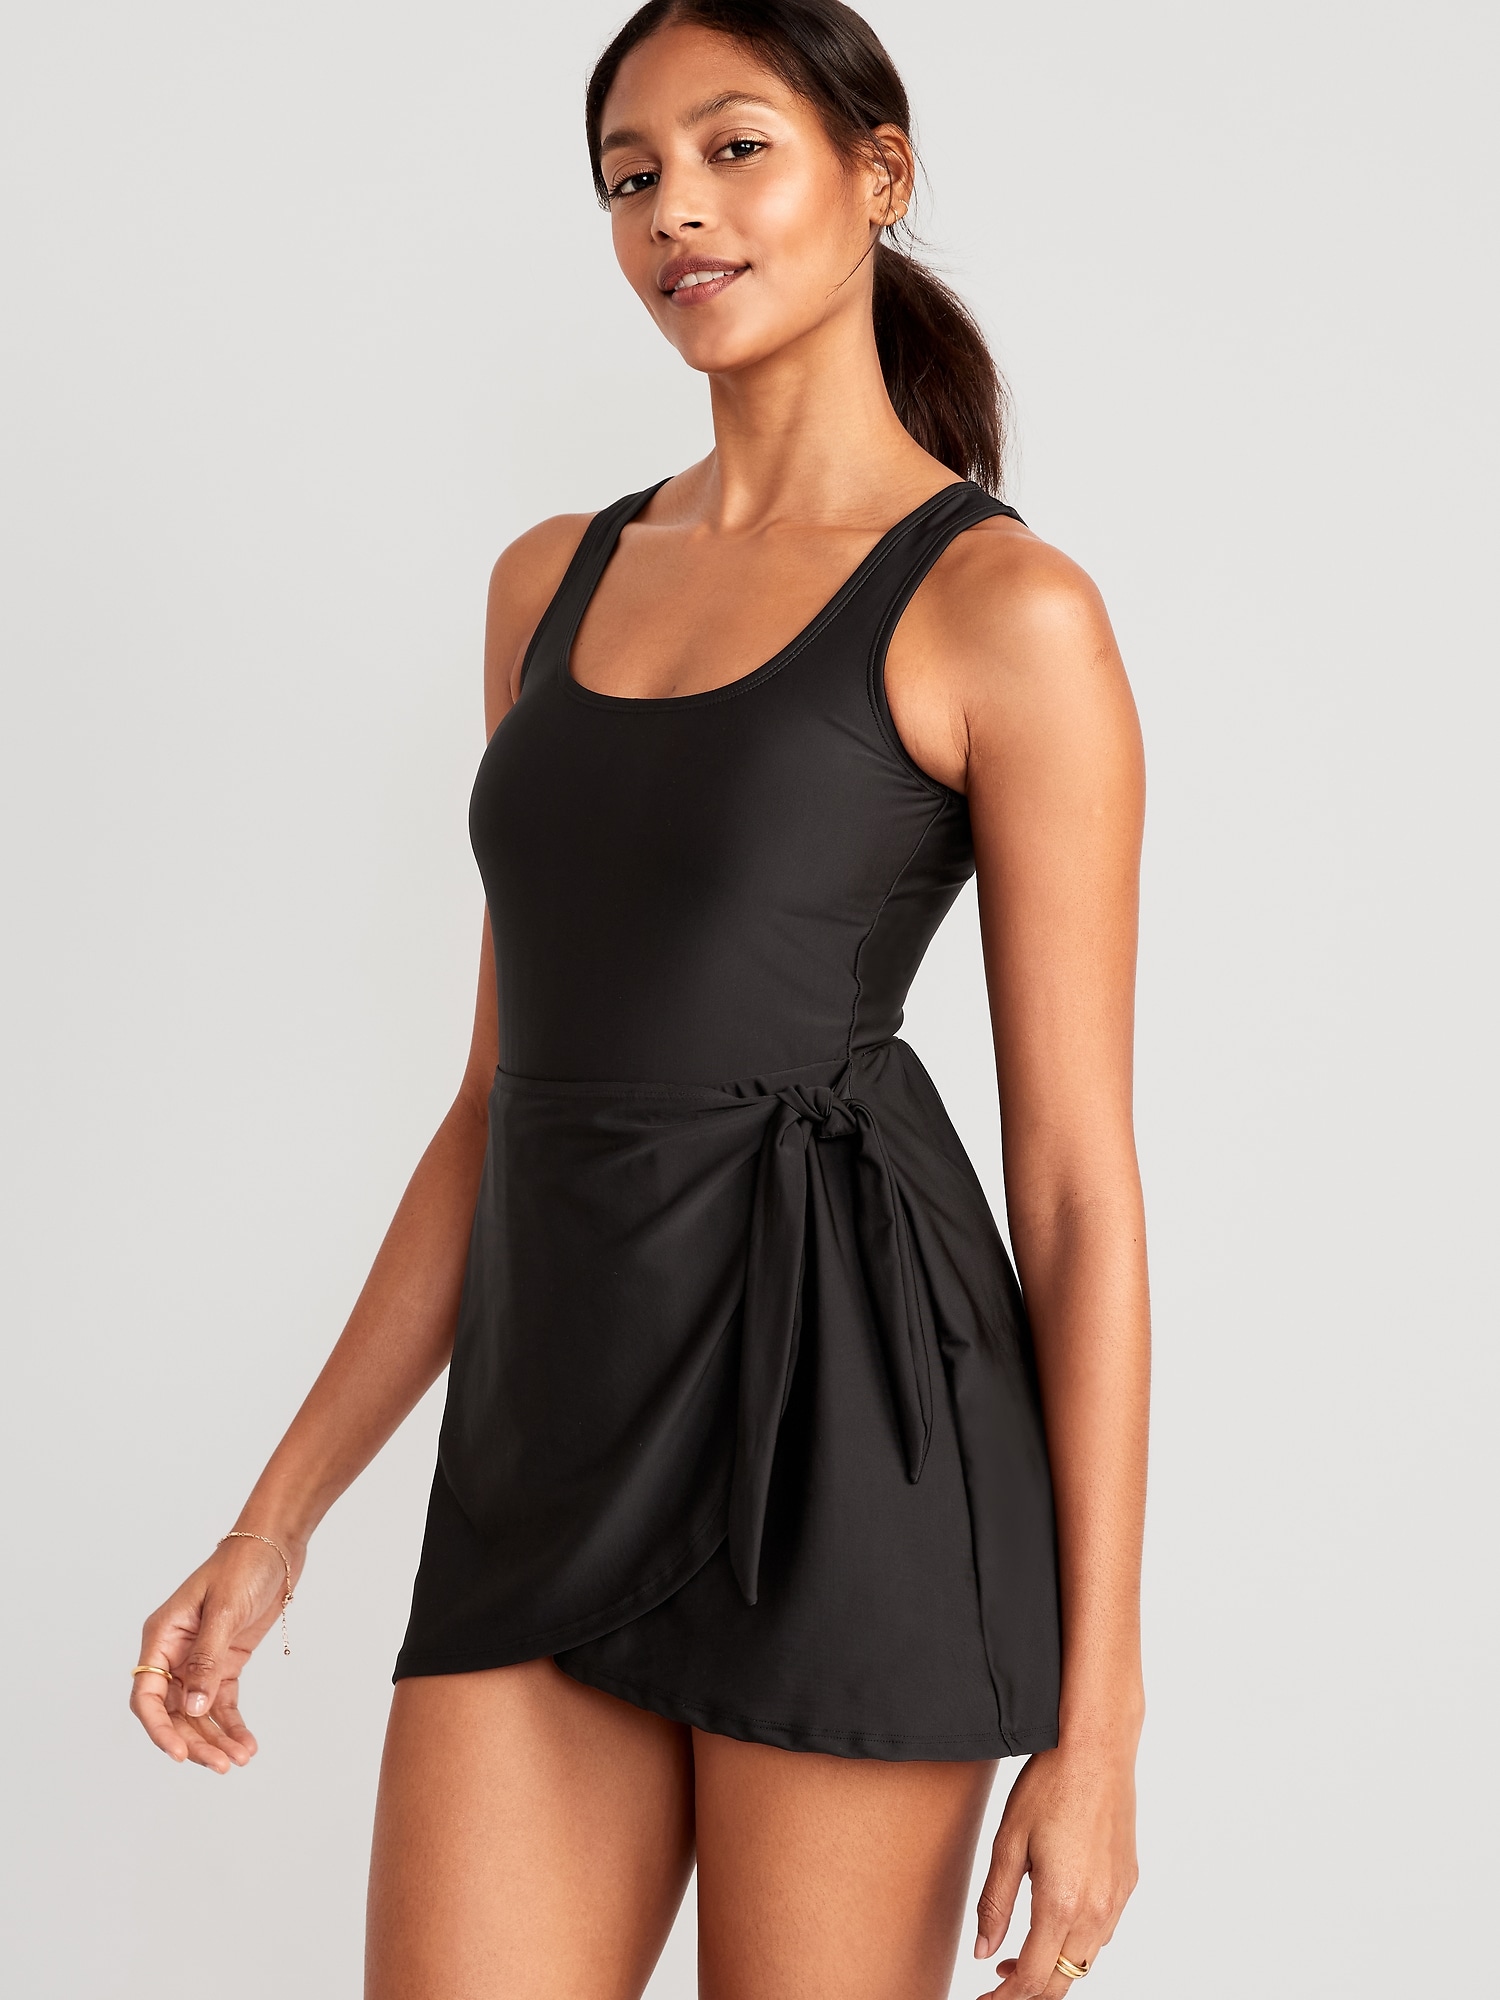 Oldnavy Wrap-Front Swimsuit Dress for Women